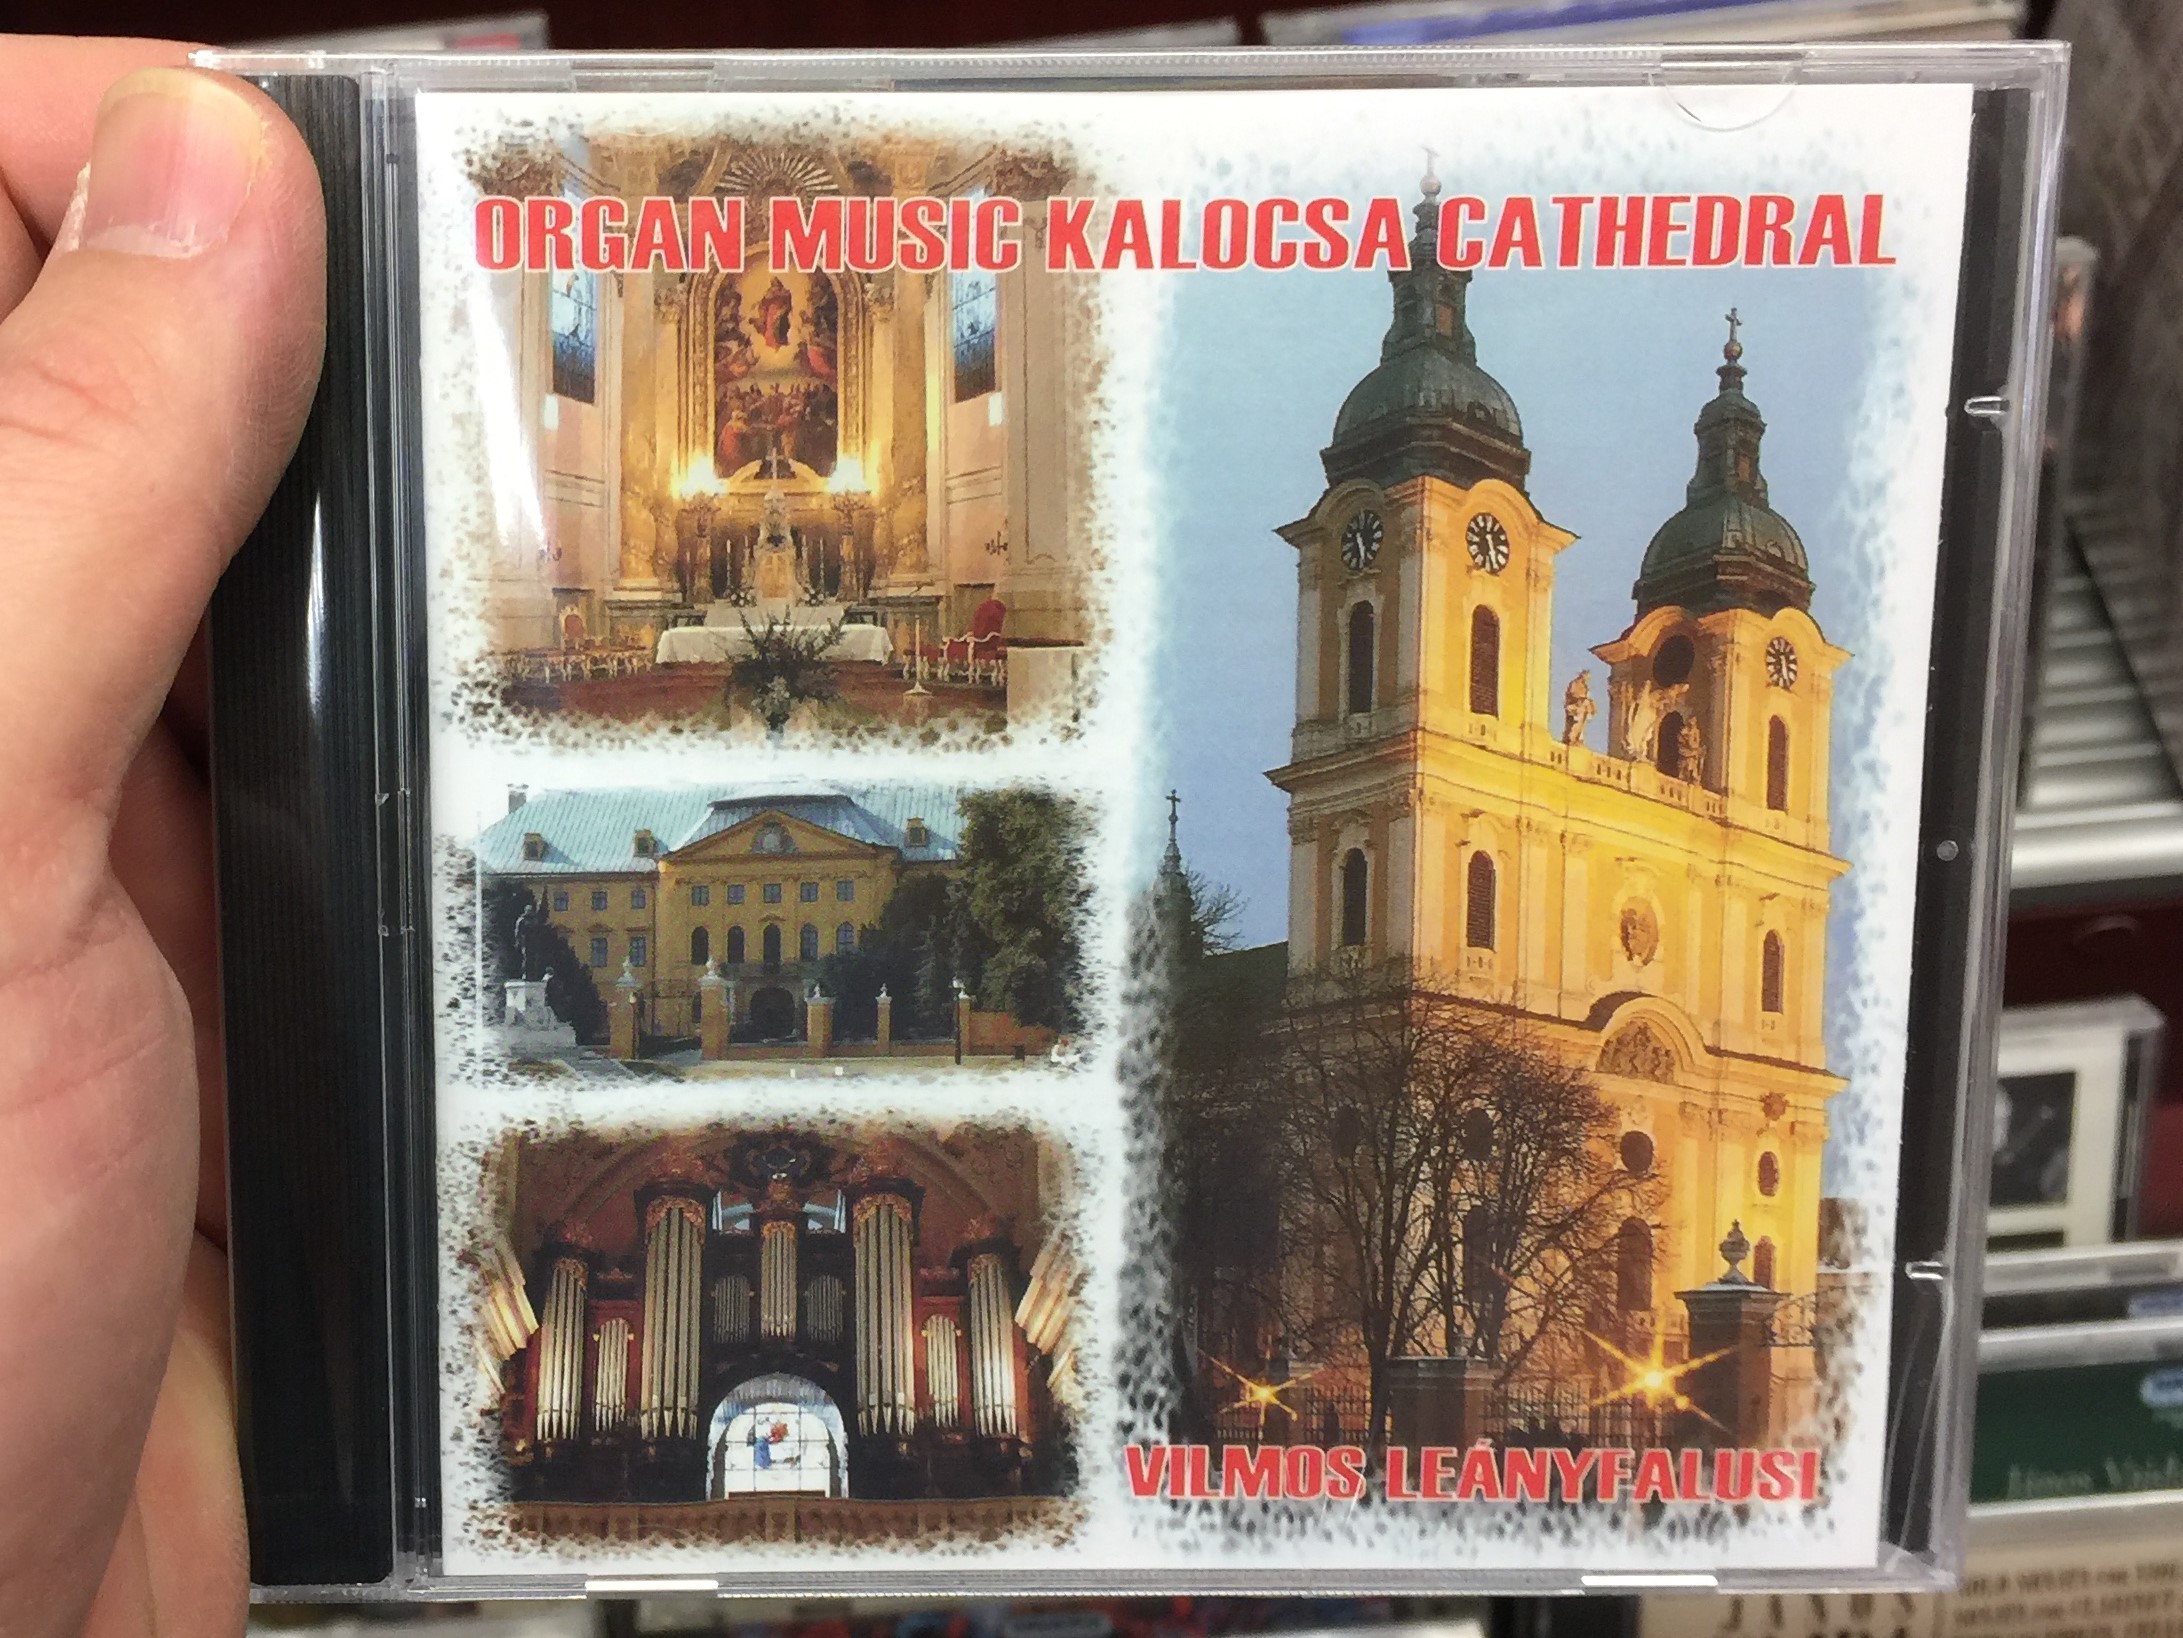 organ-music-kalocsa-cathedral-vilmos-leanyfalusi-audio-cd-2010-3021002702065-1-.jpg